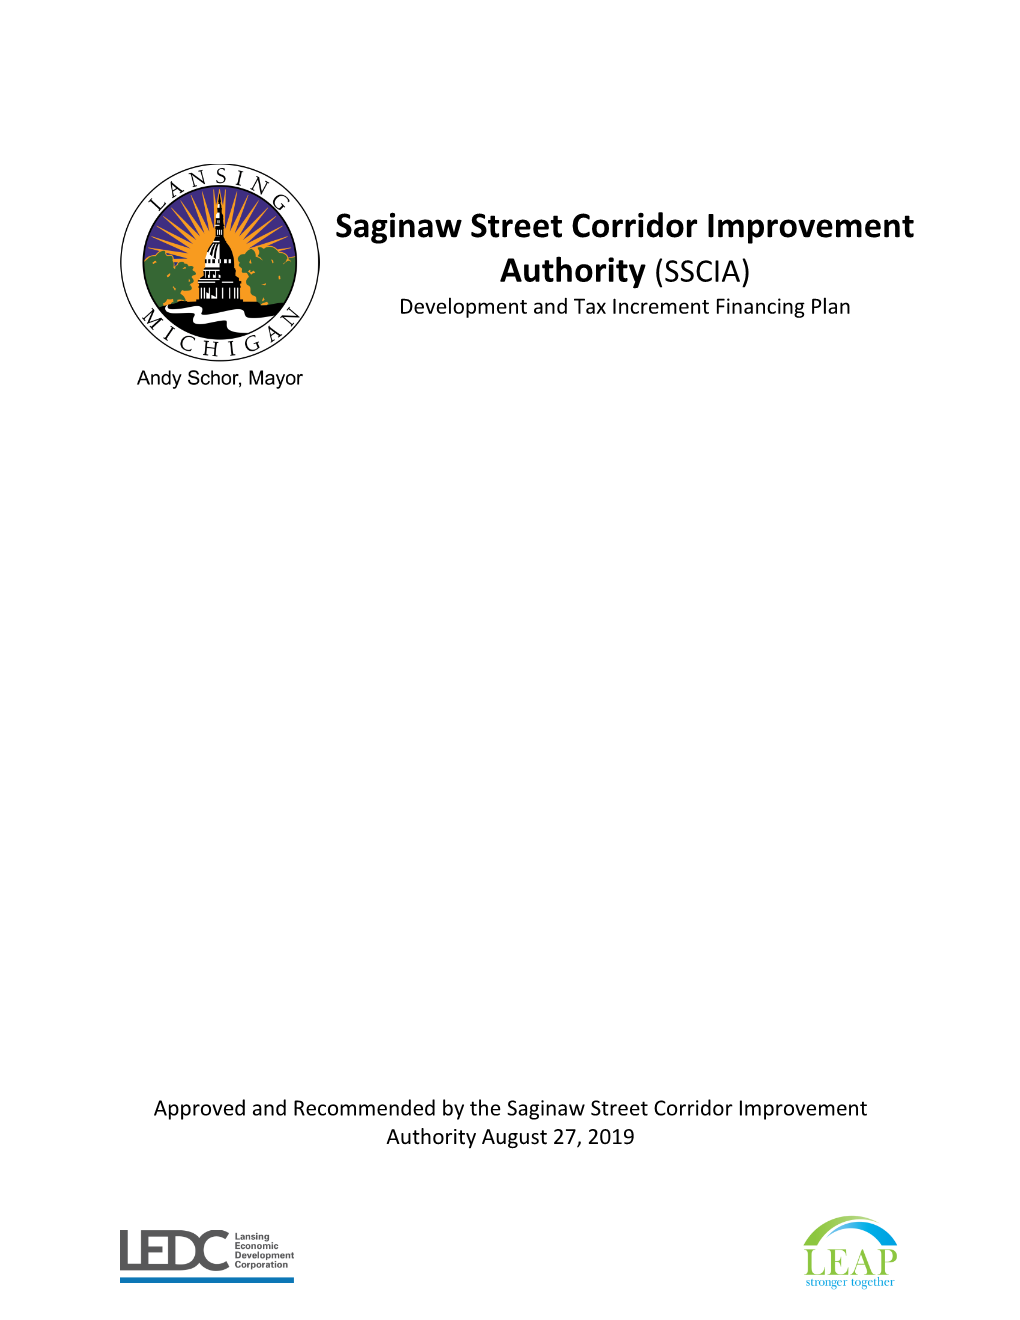 Saginaw Street Corridor Improvement Authority (SSCIA) Development and Tax Increment Financing Plan